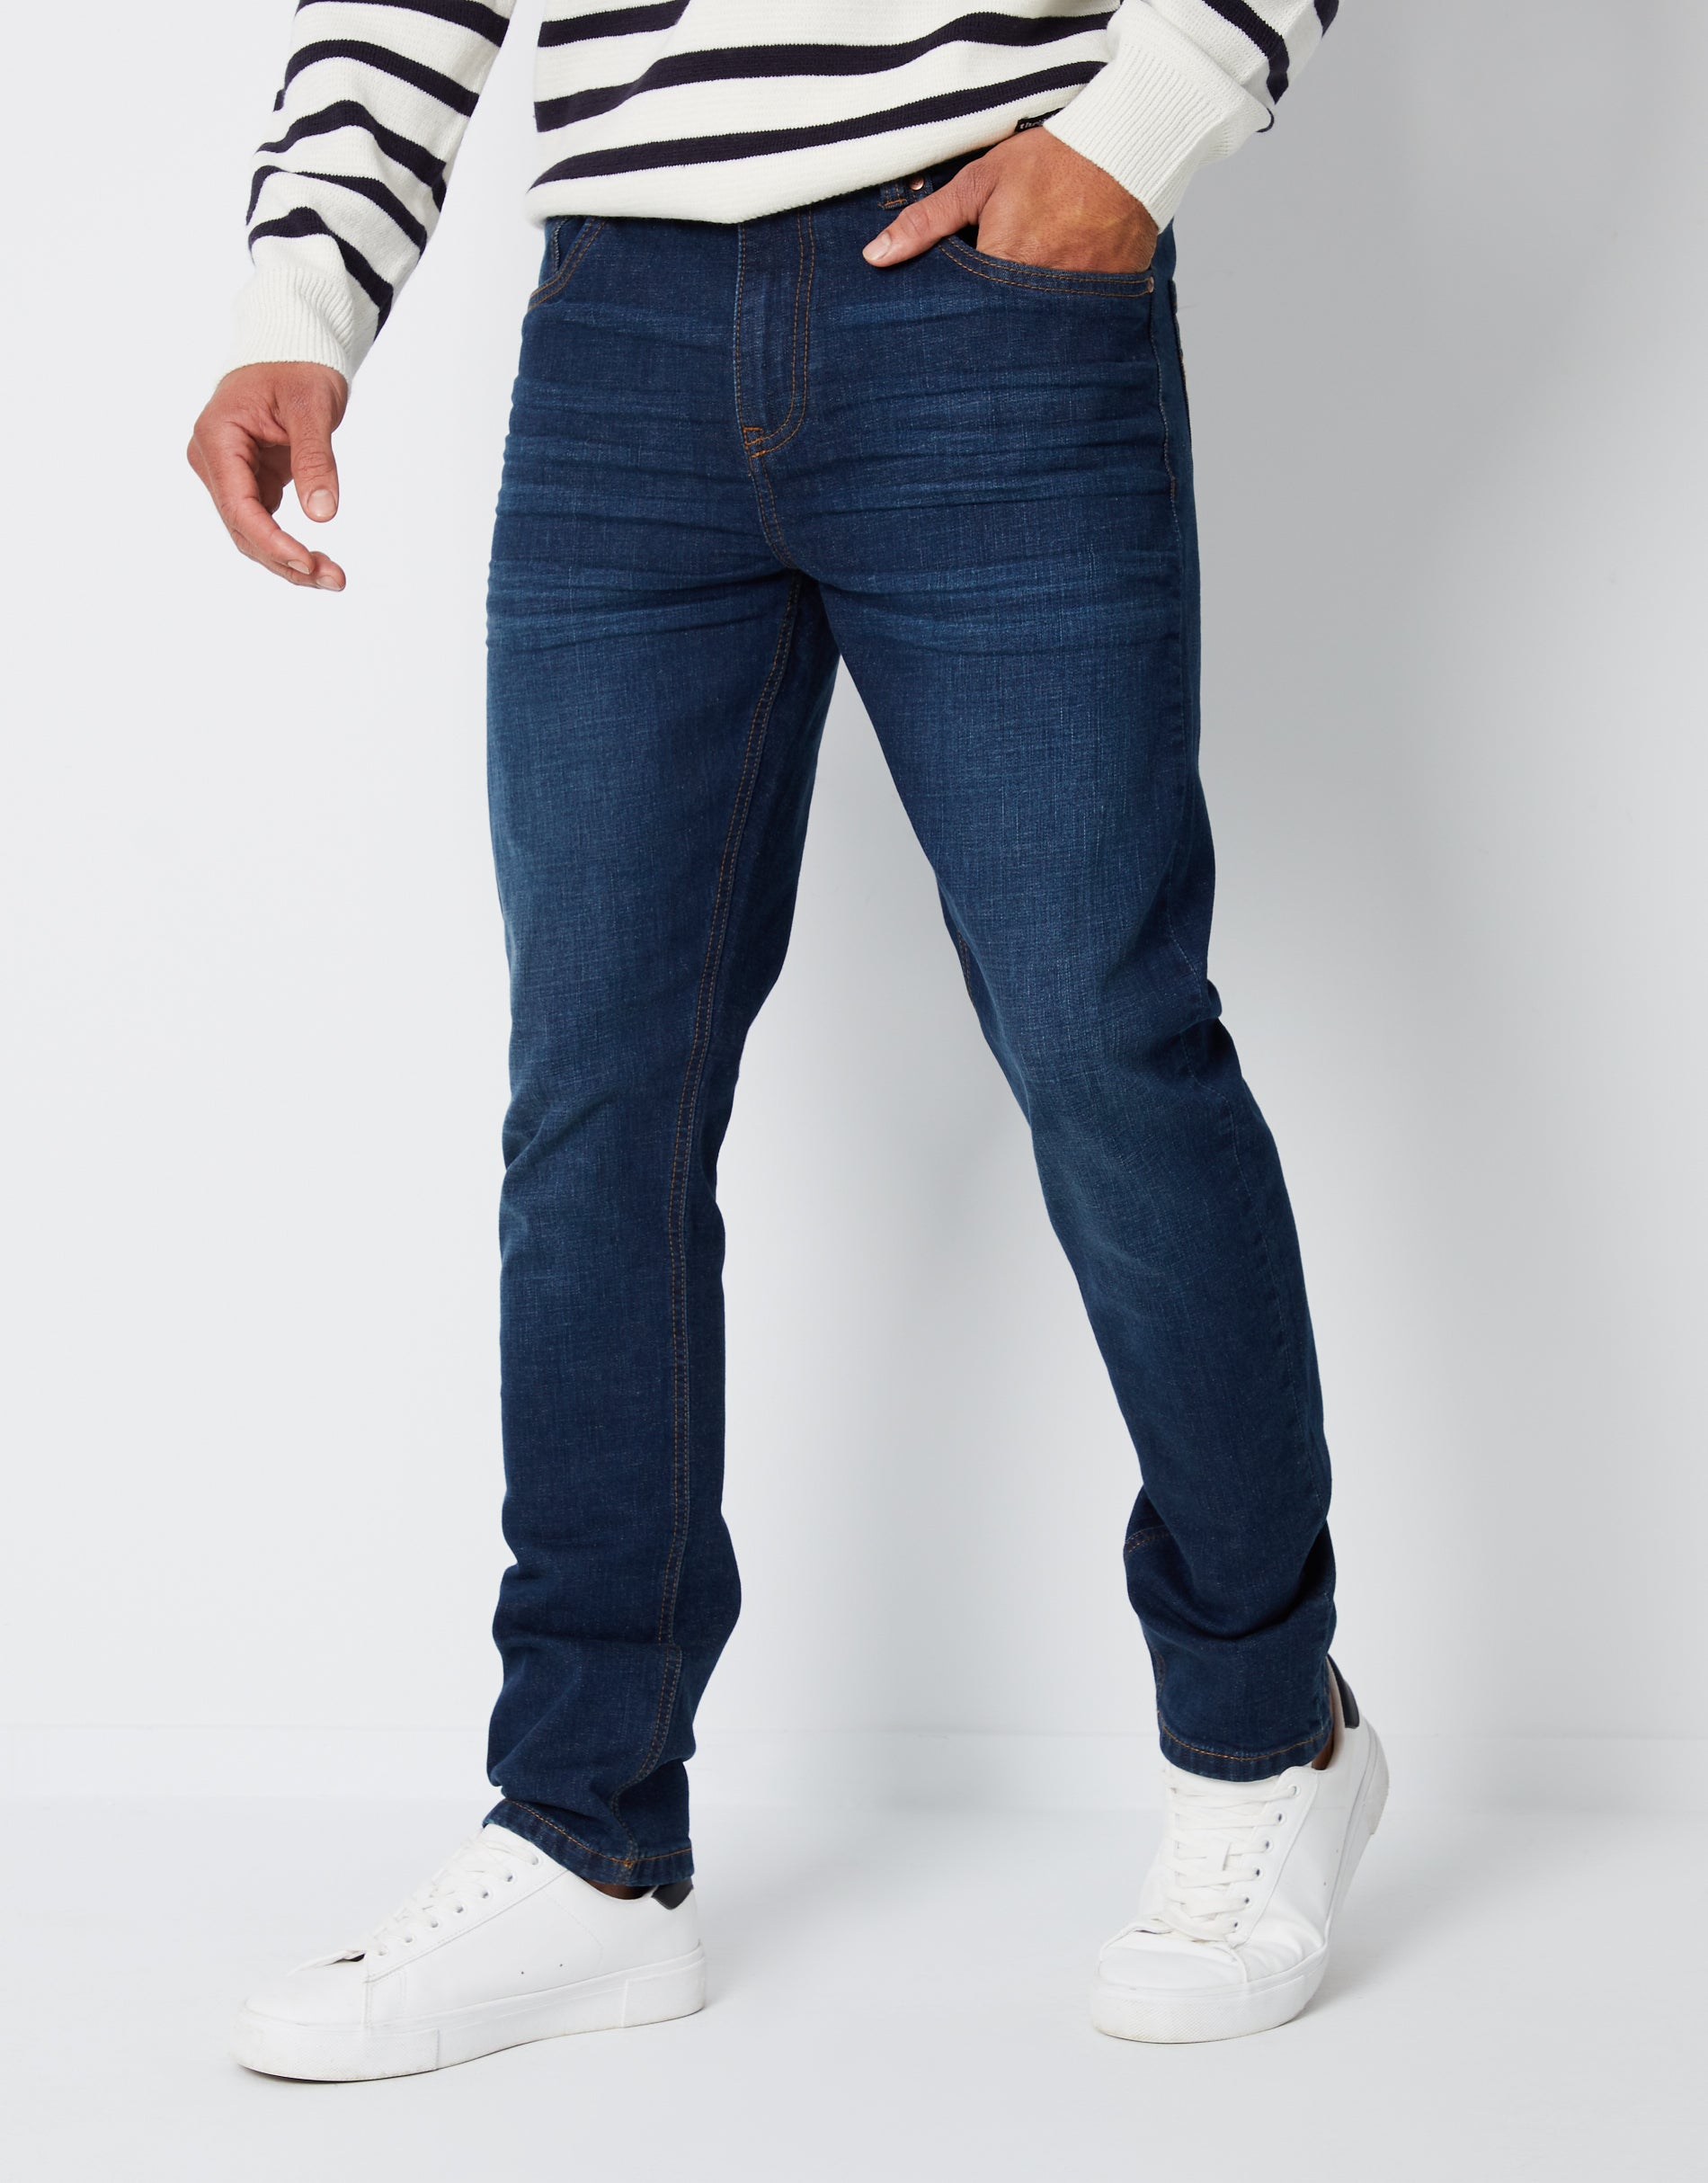 Bare Denim Men Black Slim Jeans - Selling Fast at Pantaloons.com